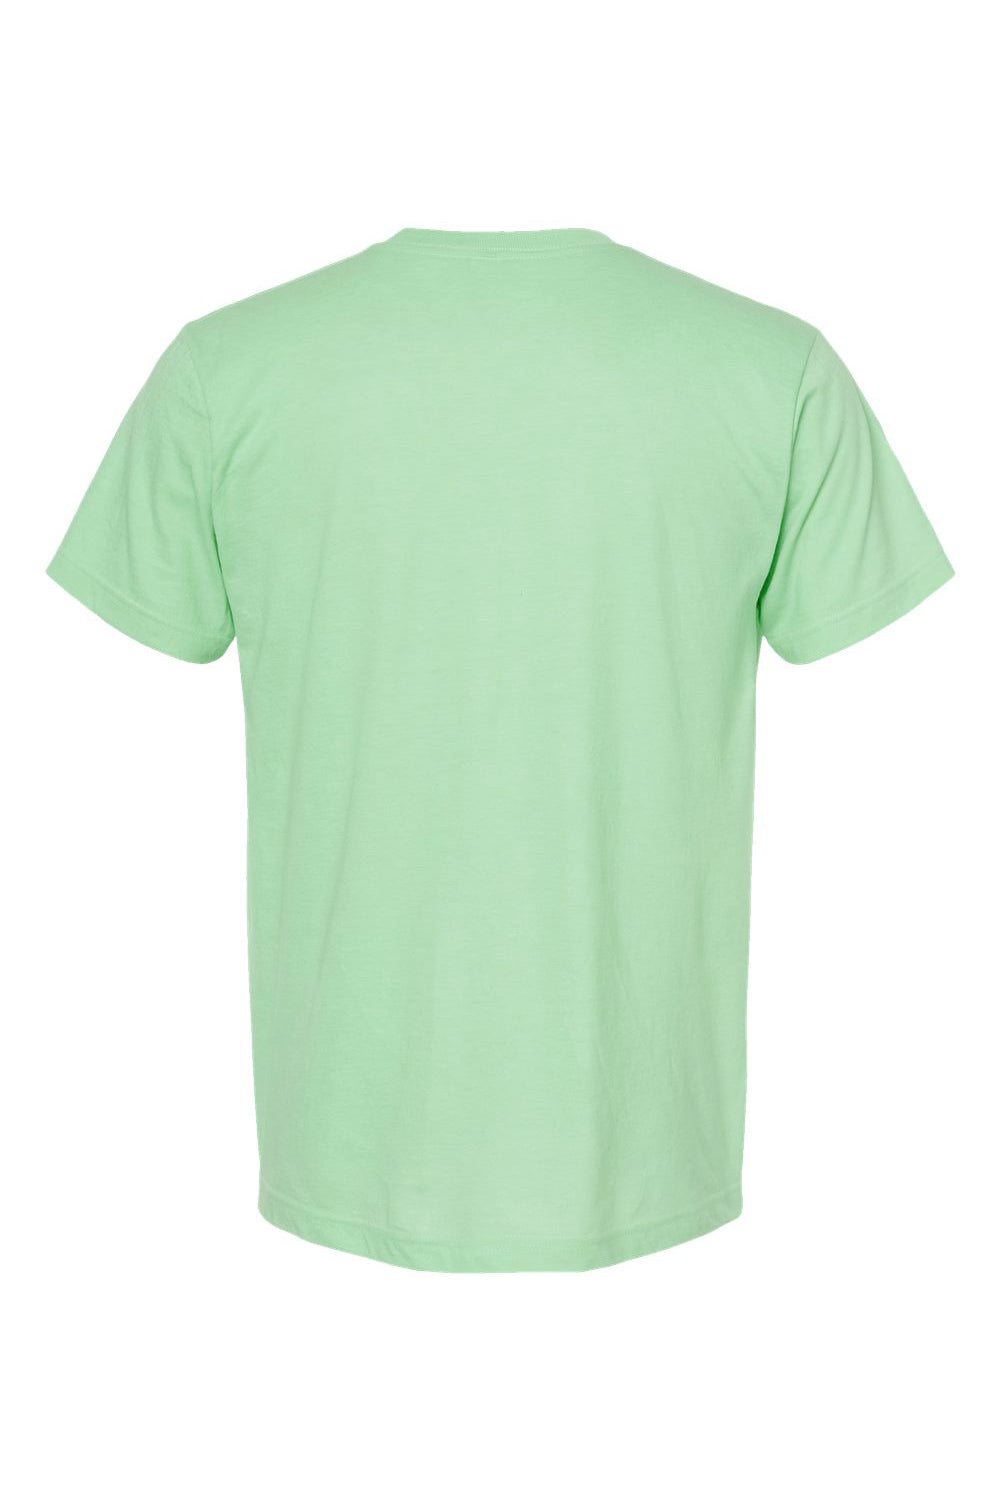 Tultex 202 Mens Fine Jersey Short Sleeve Crewneck T-Shirt Heather Neo Mint Green Flat Back